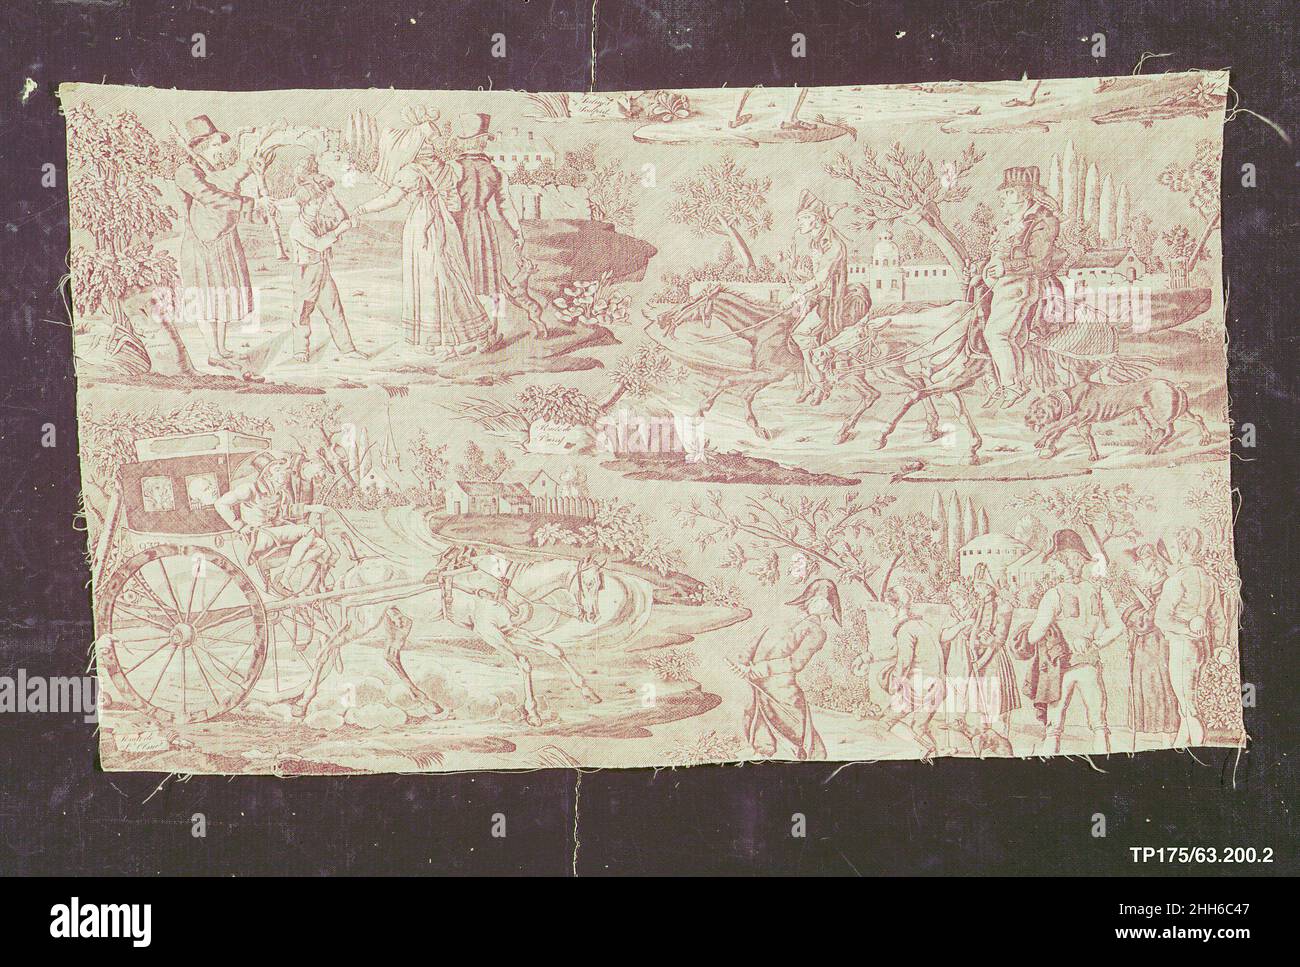 'La Route de Poissy' with other scenes ca. 1820 Ferdinand Favre et Cie. 'La Route de Poissy' with other scenes  228928 Stock Photo